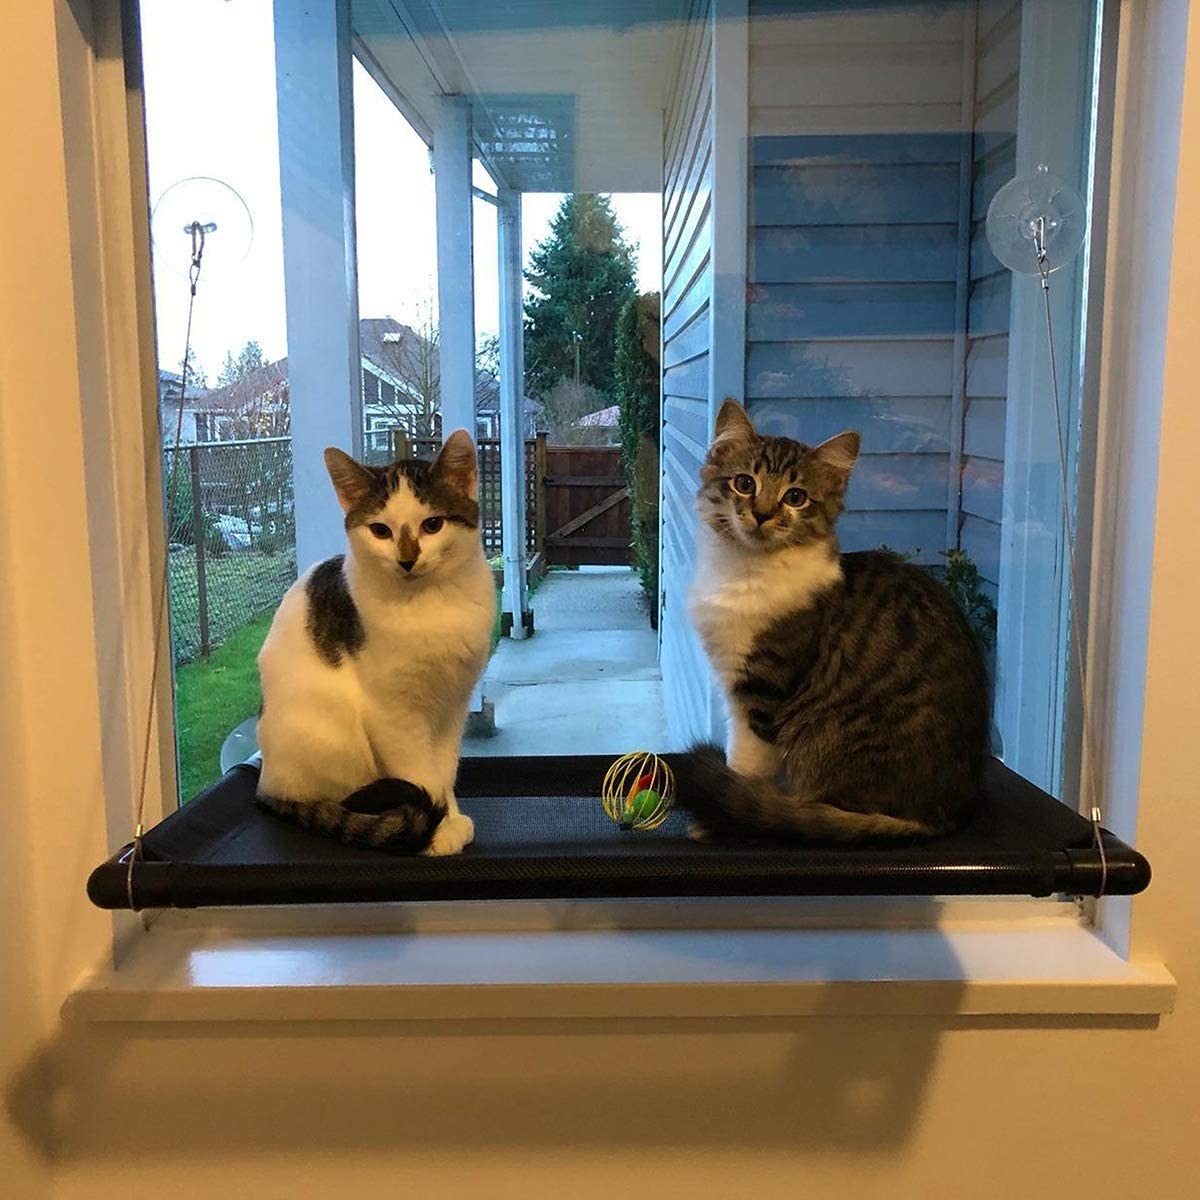 Two kittens on the cat hammock